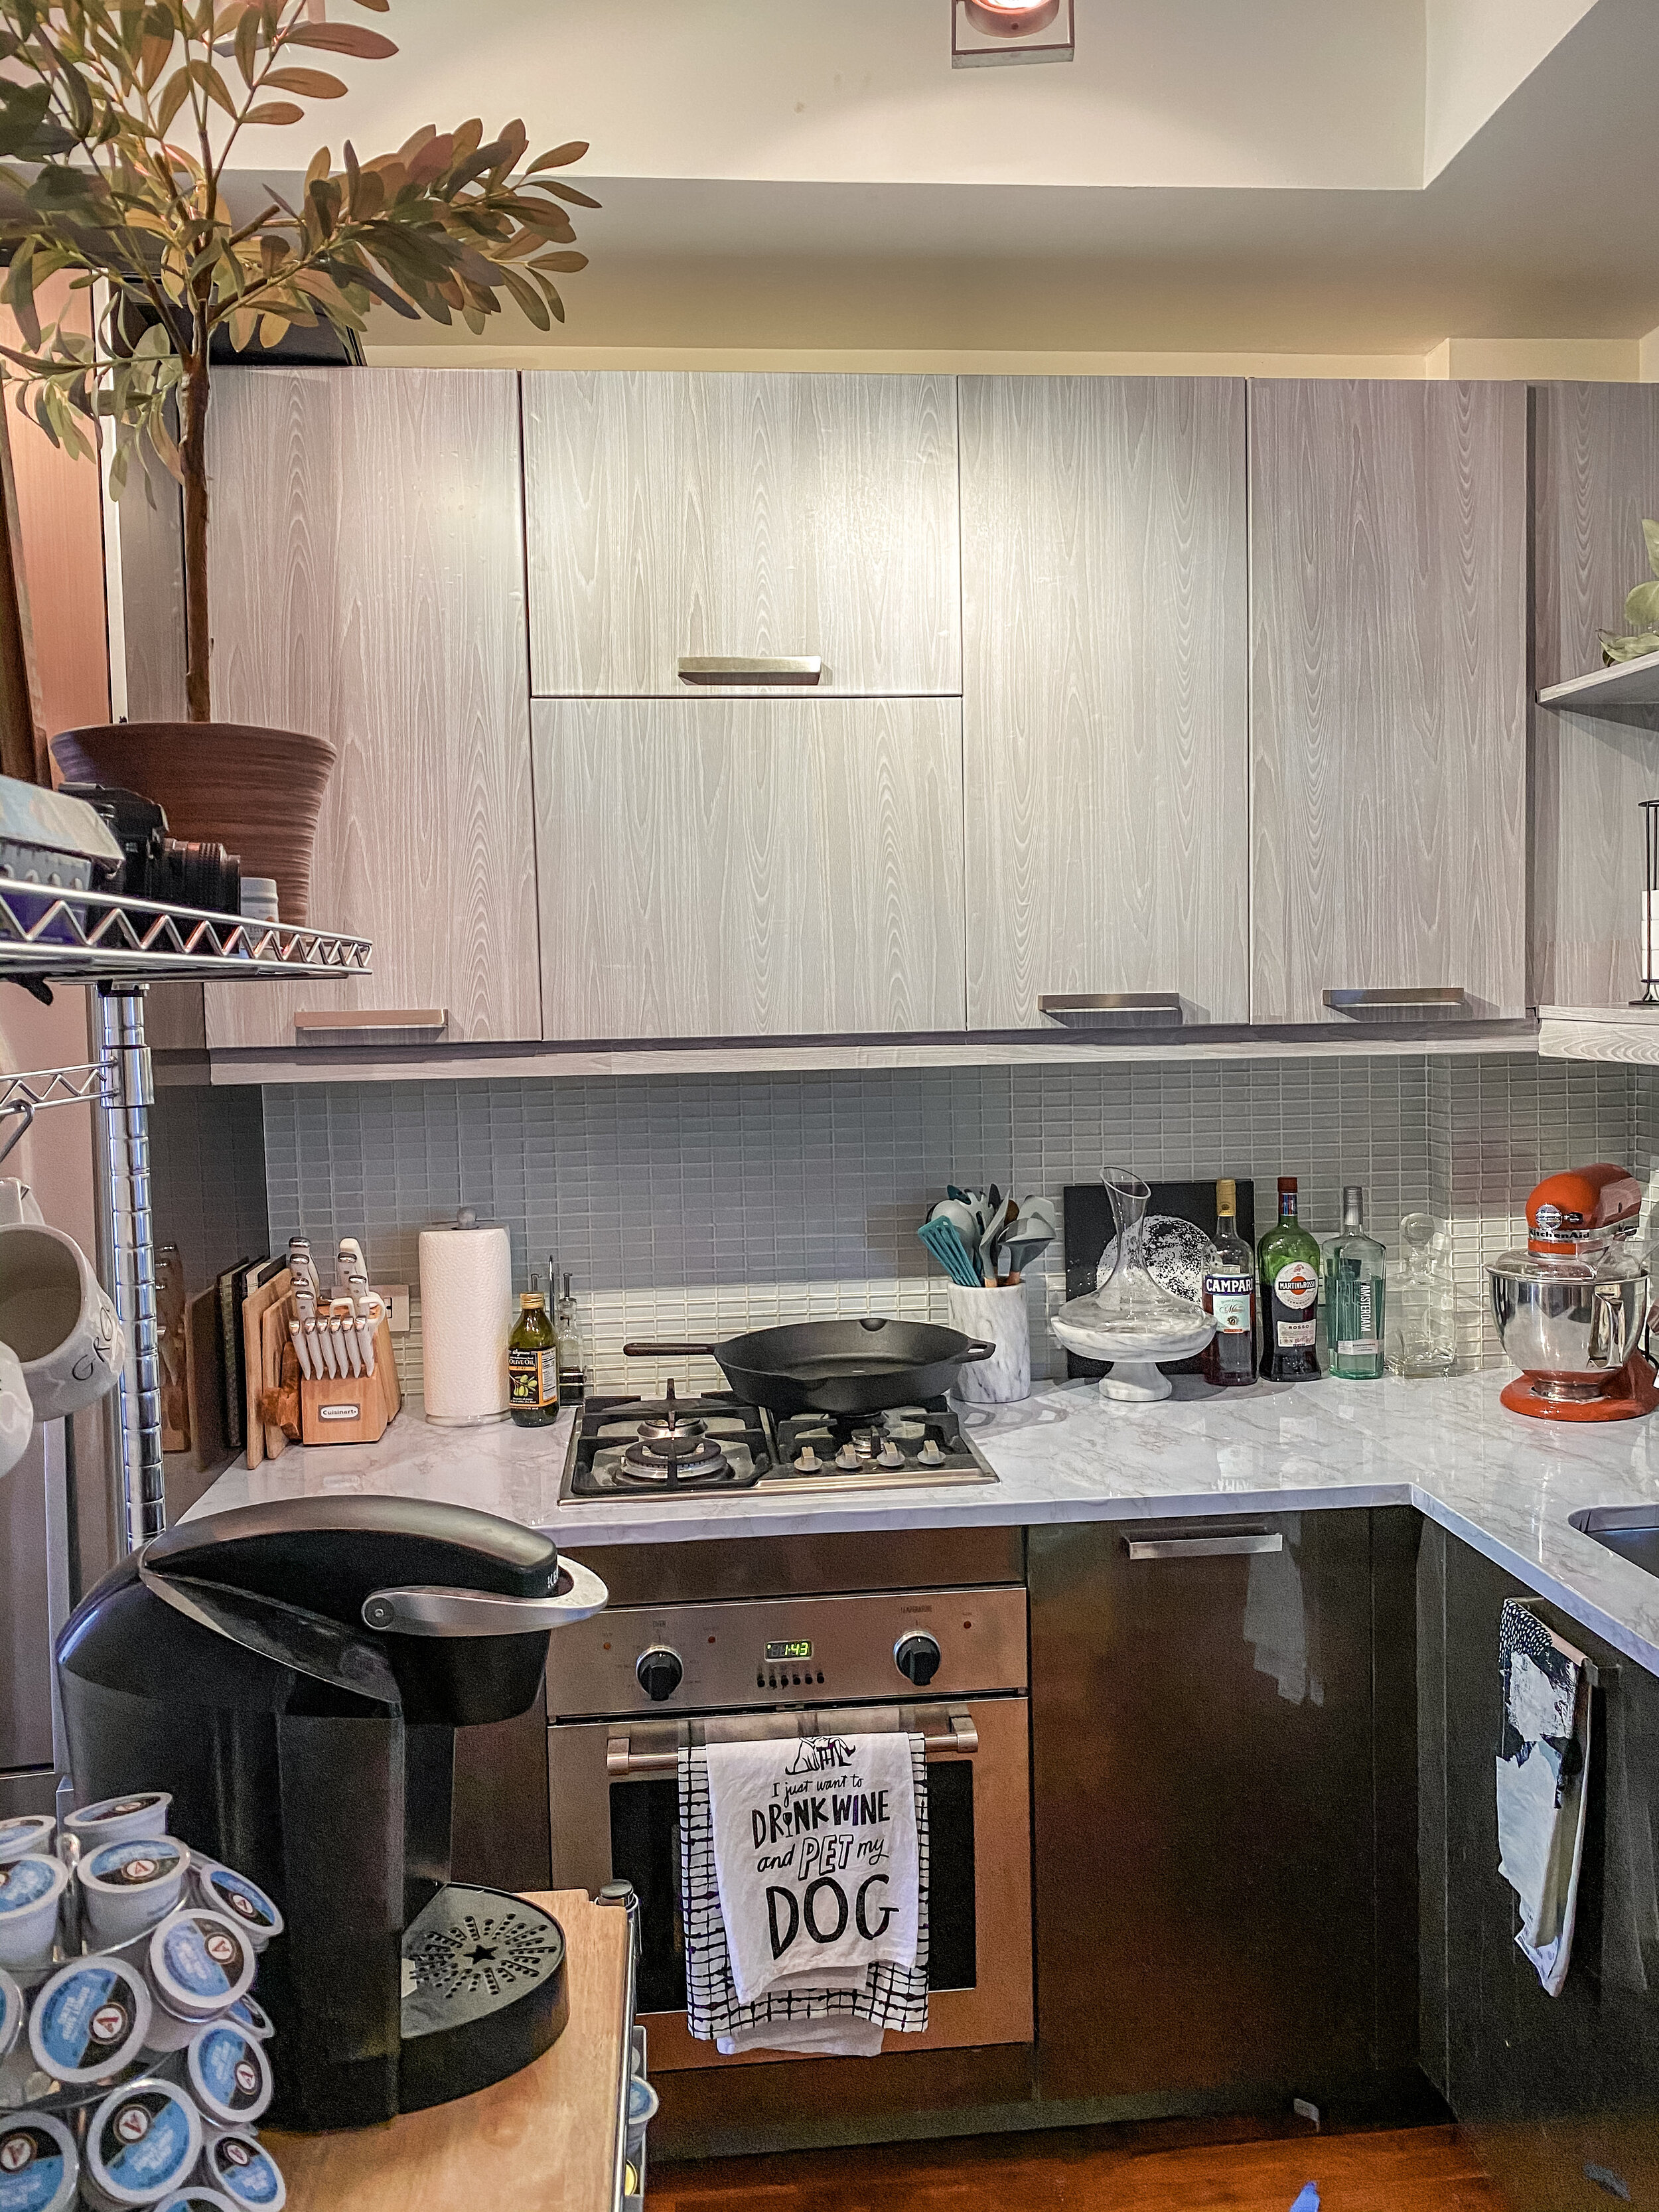 Renter-Friendly DIY Apartment Makeover: Easy Home Upgrades